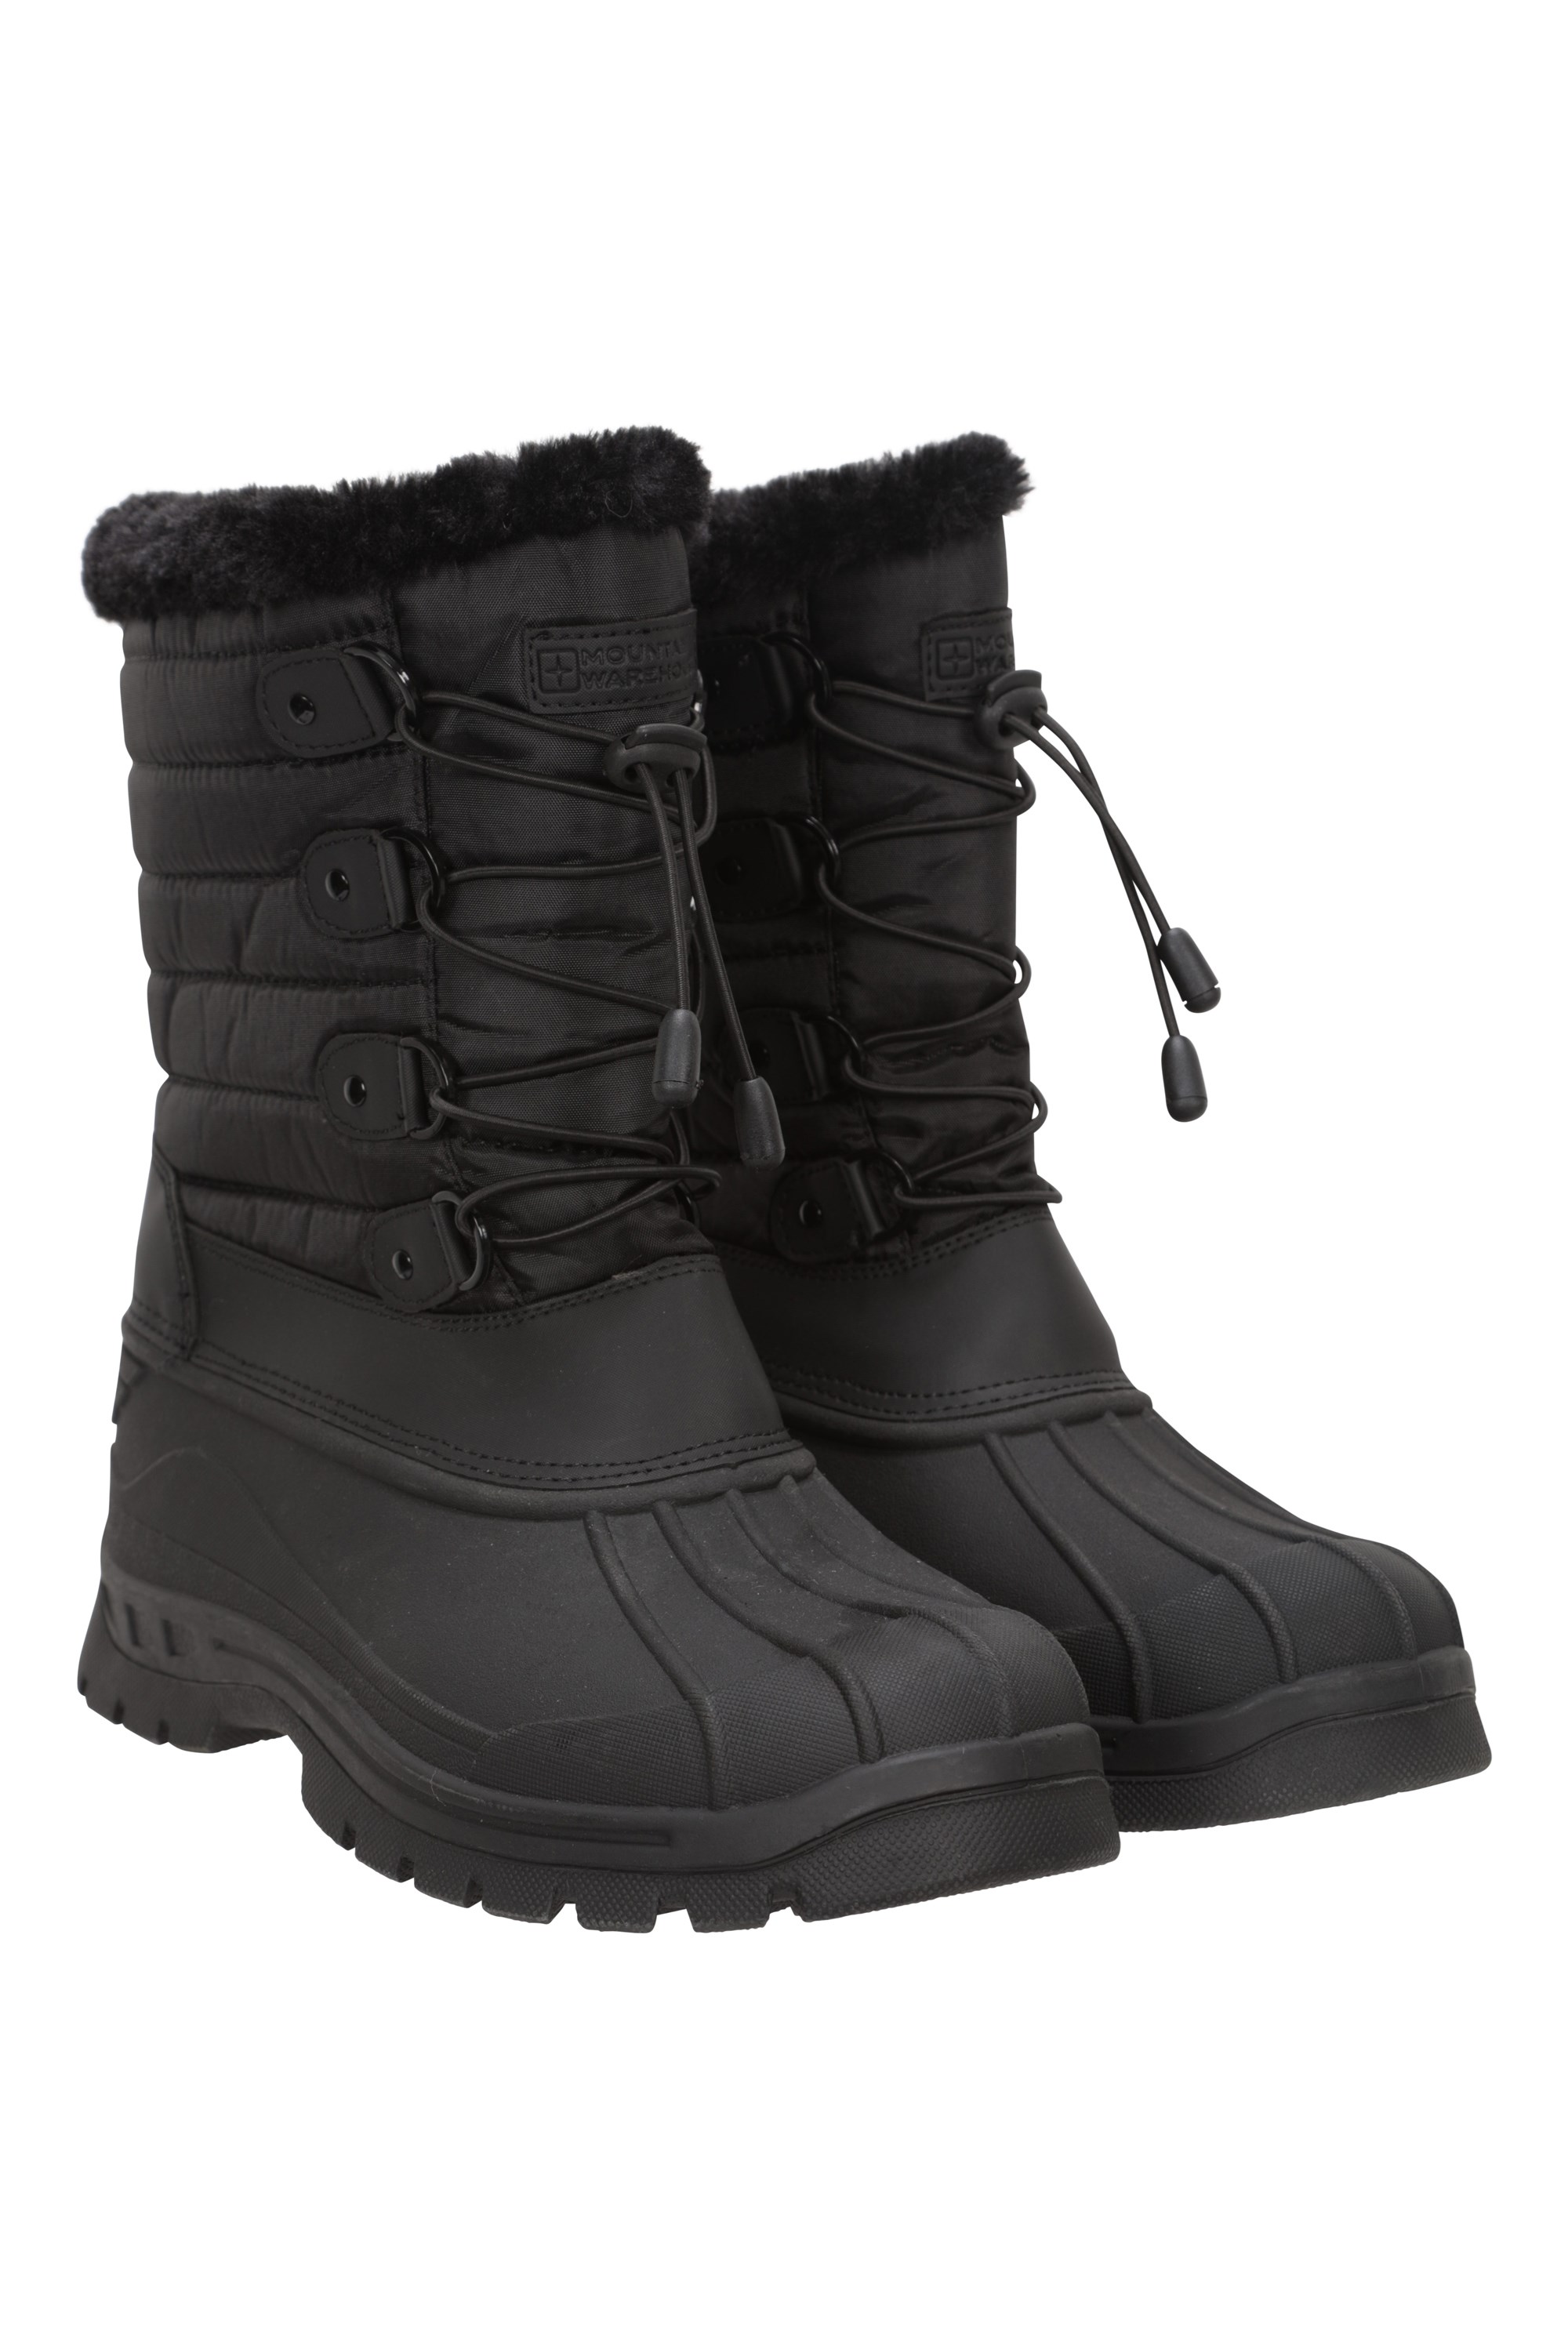 Whistler Womens Adaptive Snow Boots - Black